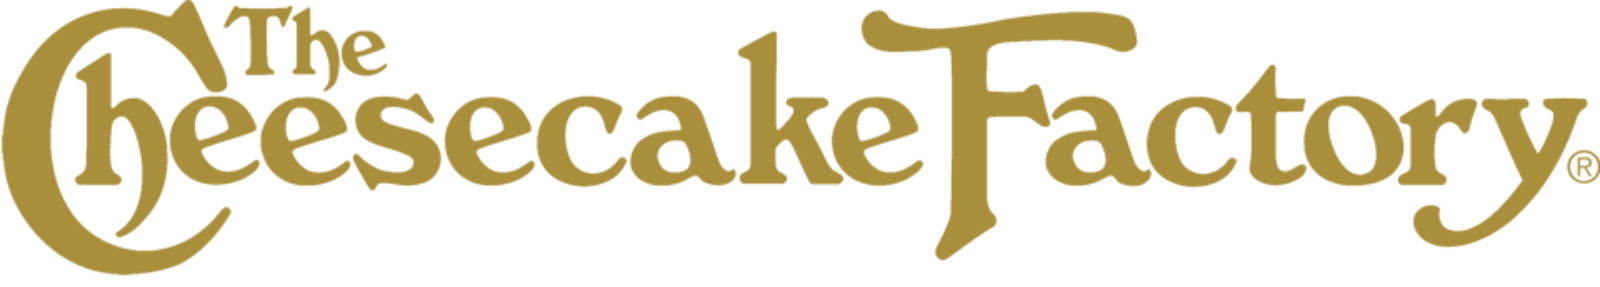 The CheesecakeFactory Logo